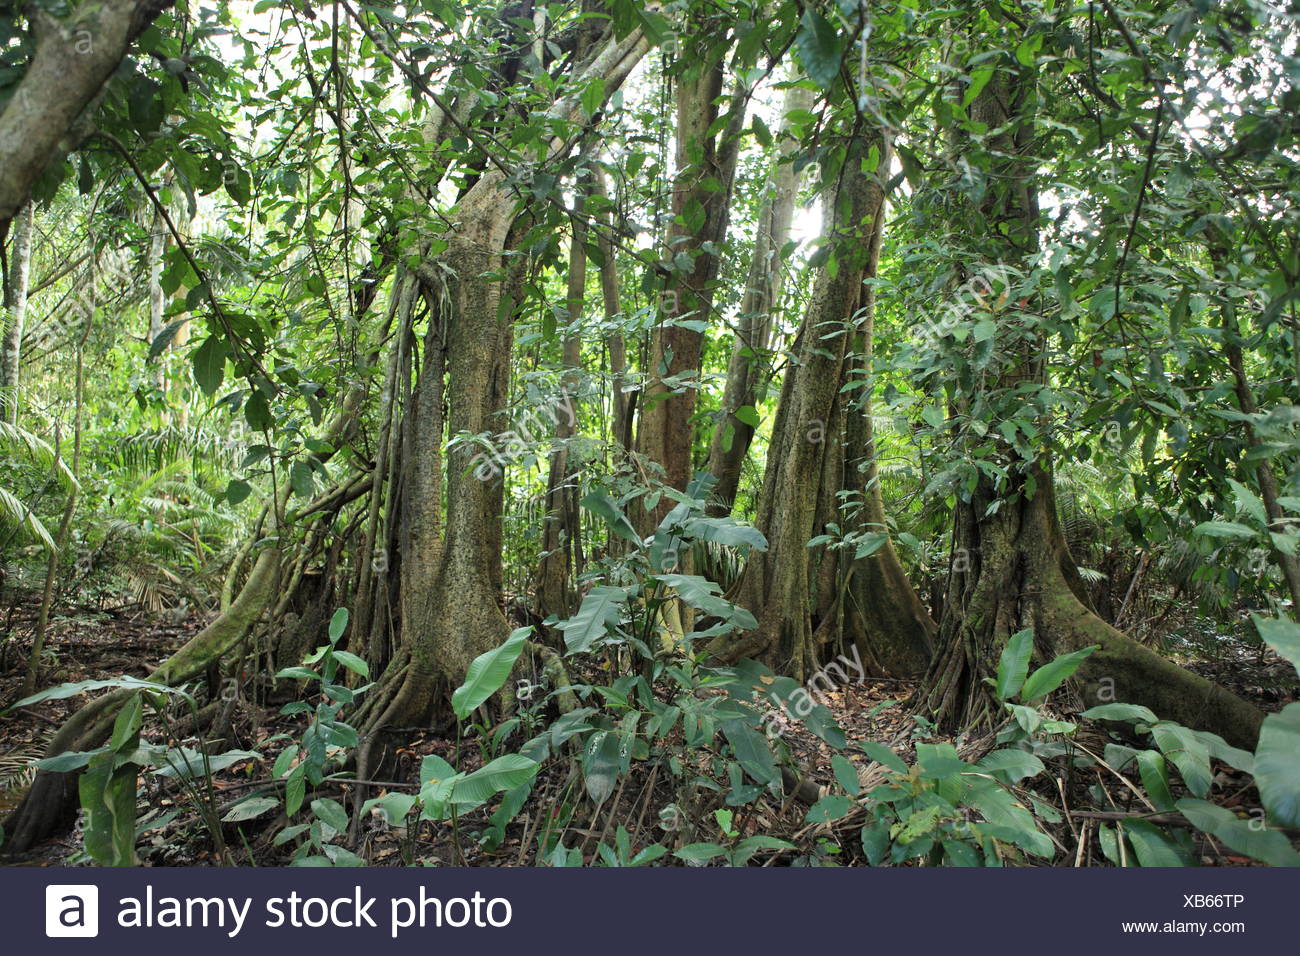 Amazon Jungle Stock Photos & Amazon Jungle Stock Images - Alamy